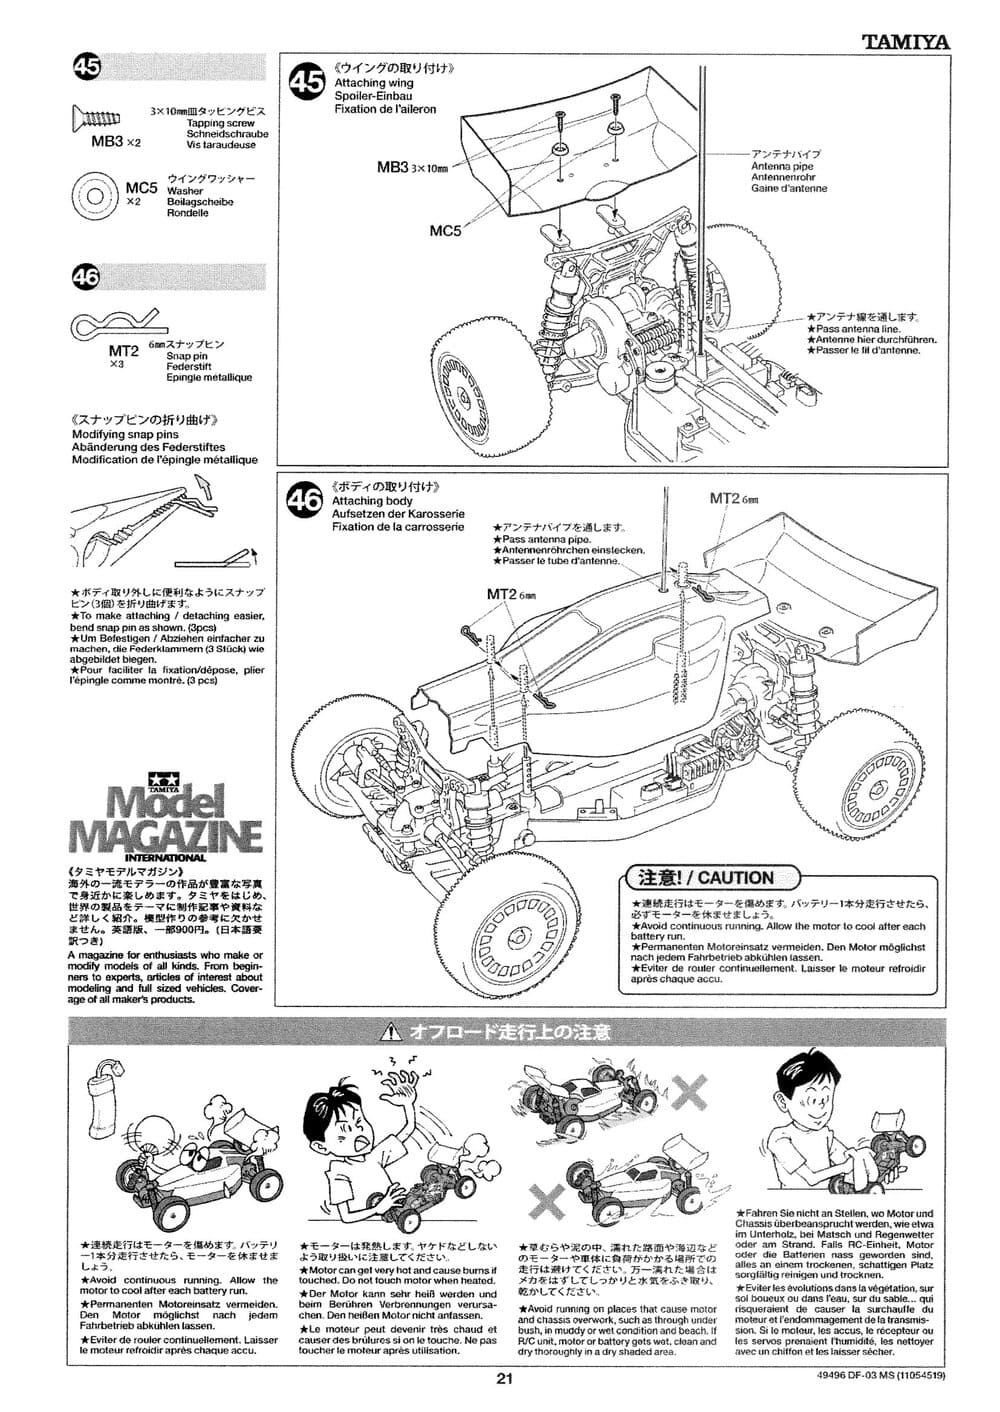 Tamiya - DF-03 MS Chassis Chassis - Manual - Page 21